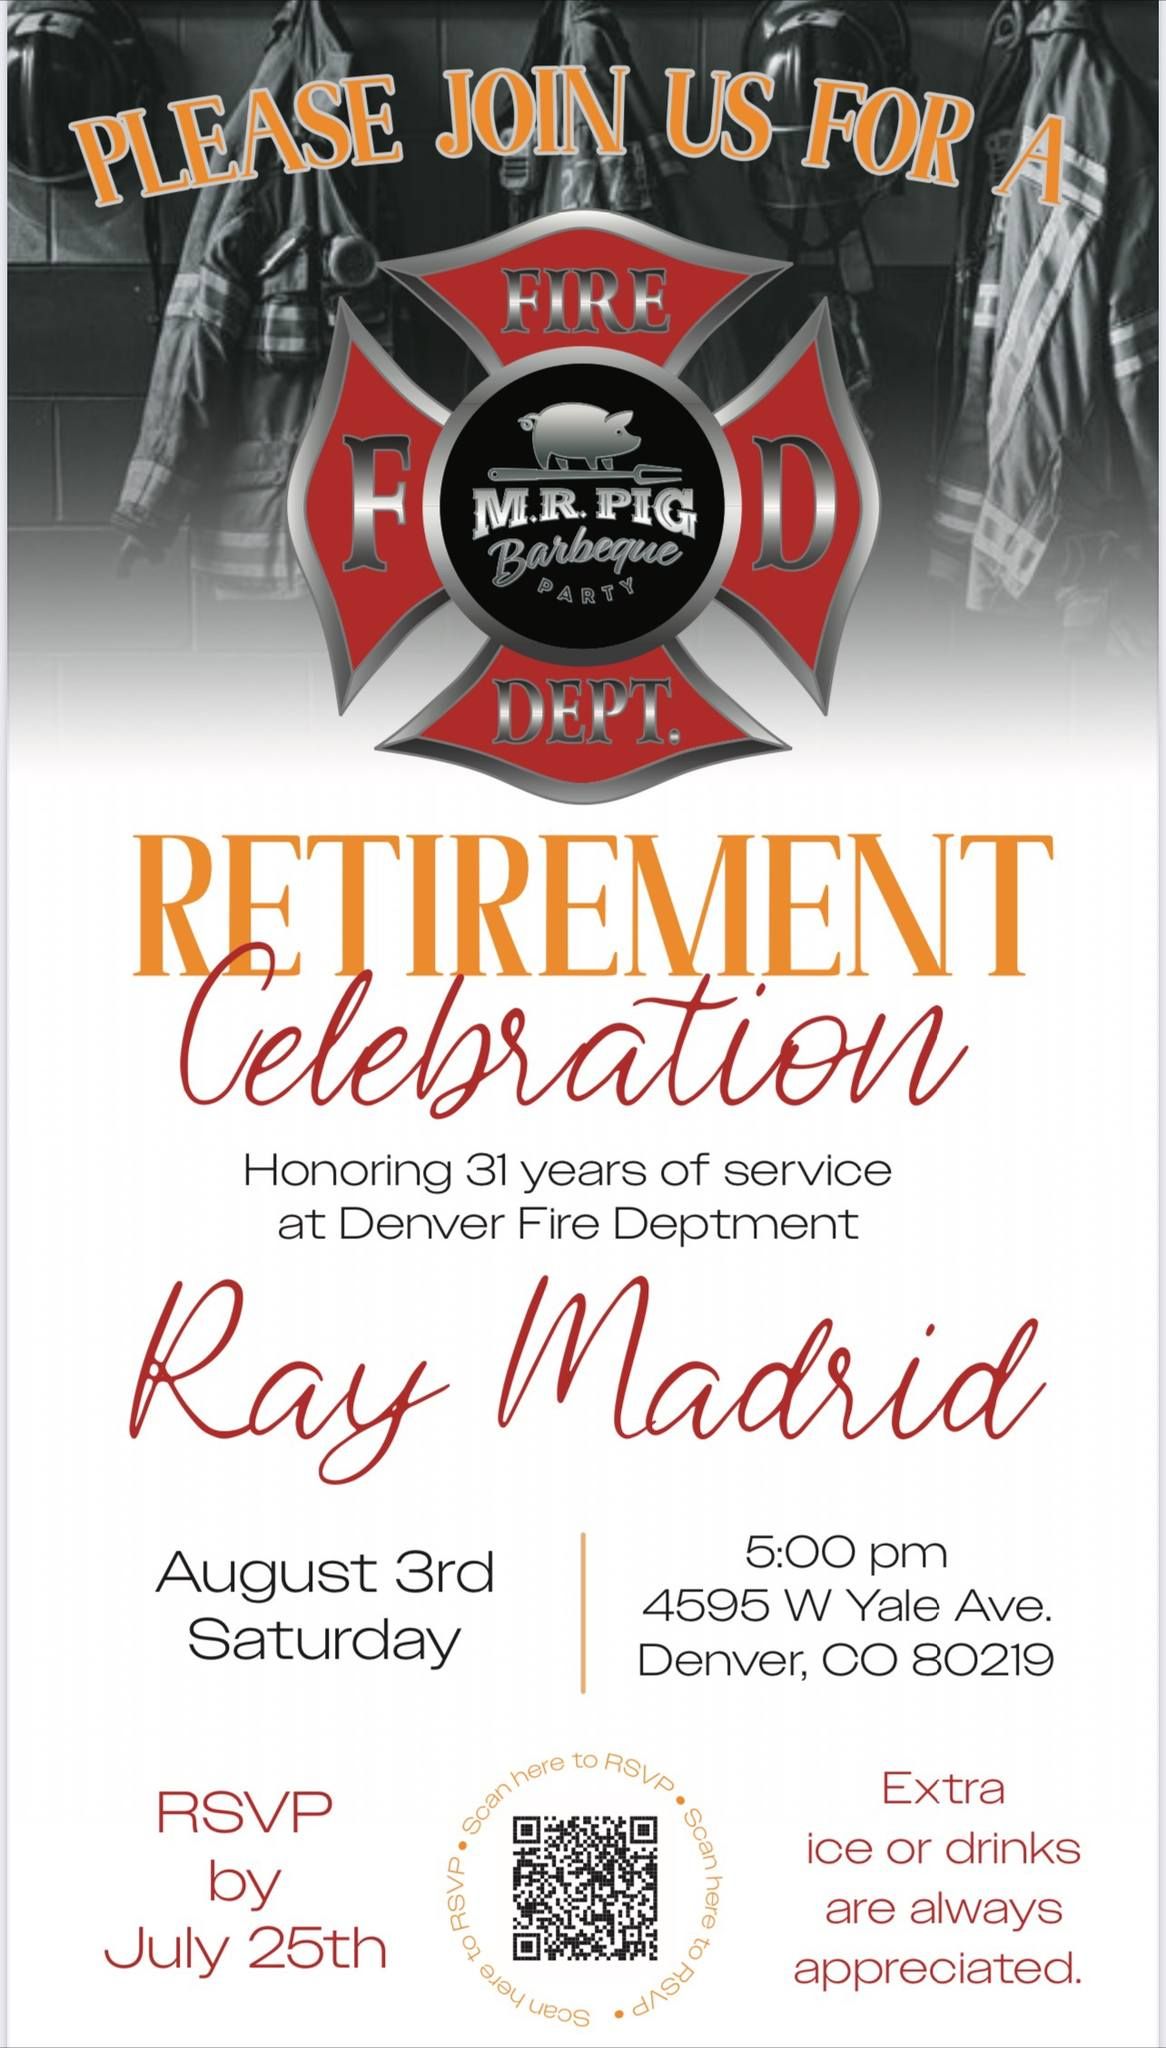 Ray Madrid\u2019s Retirement Celebration